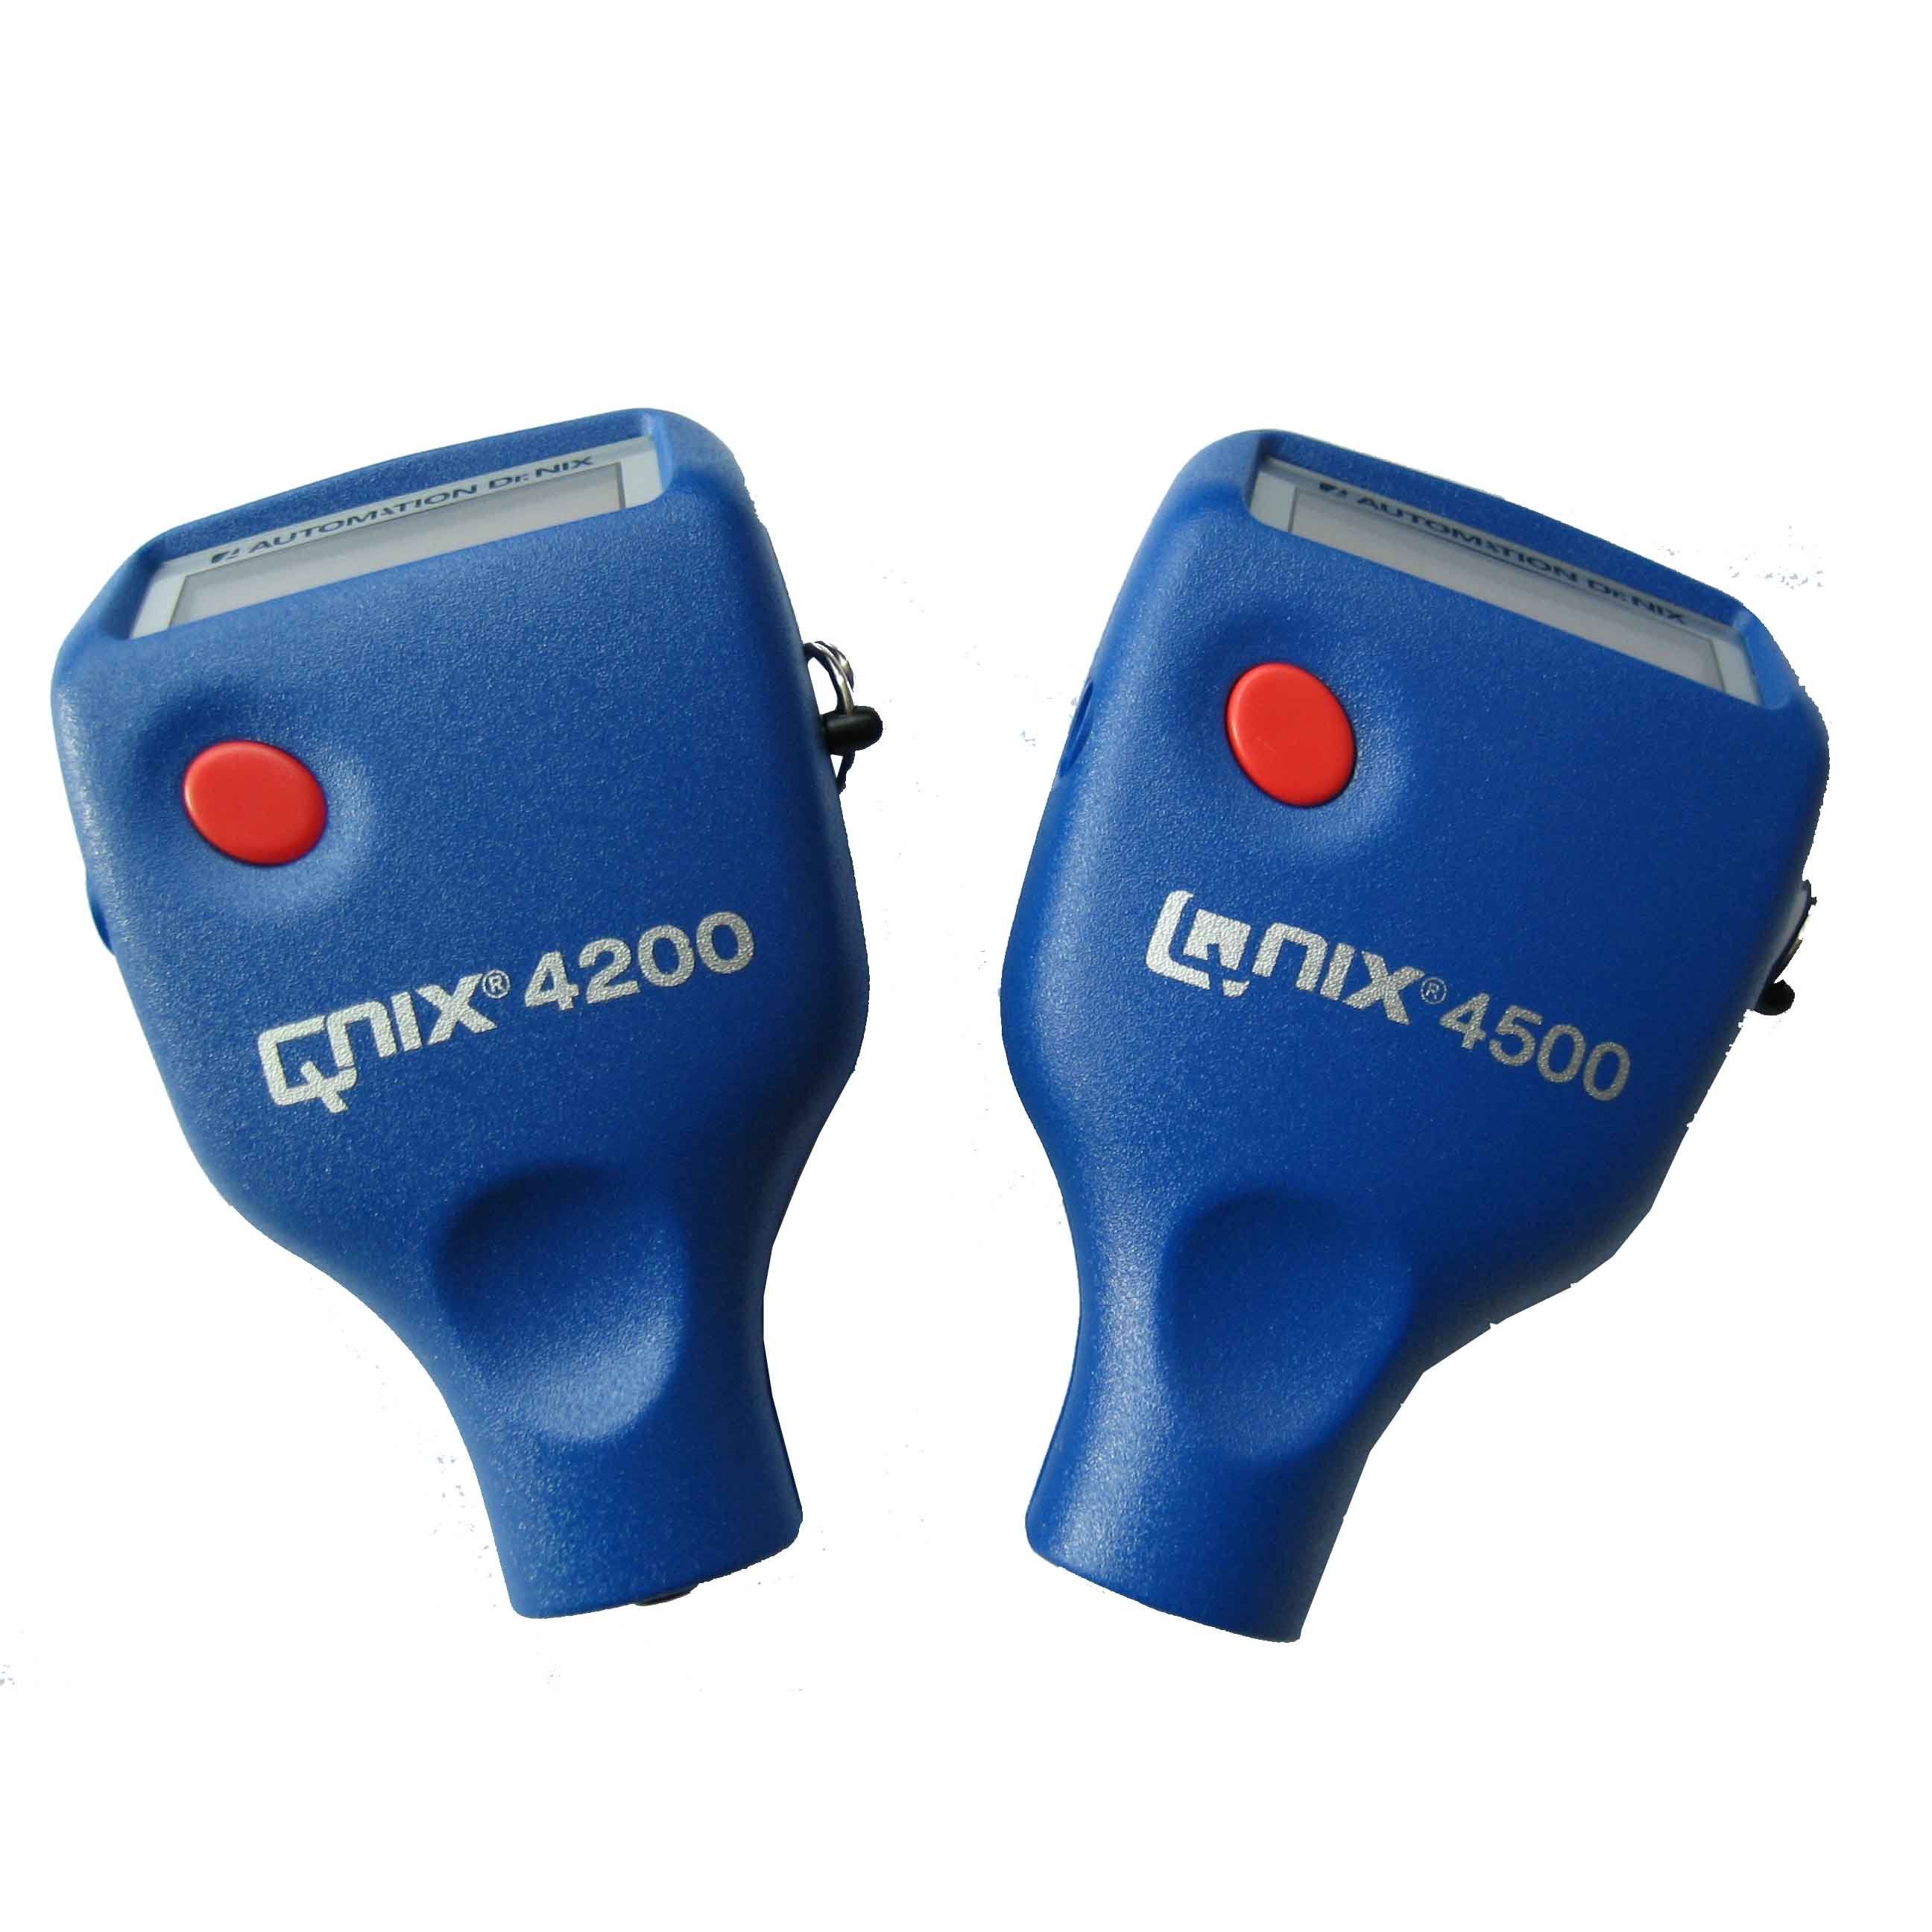 Coating Thickness Gauge (QNIX4200/QNIX4500)